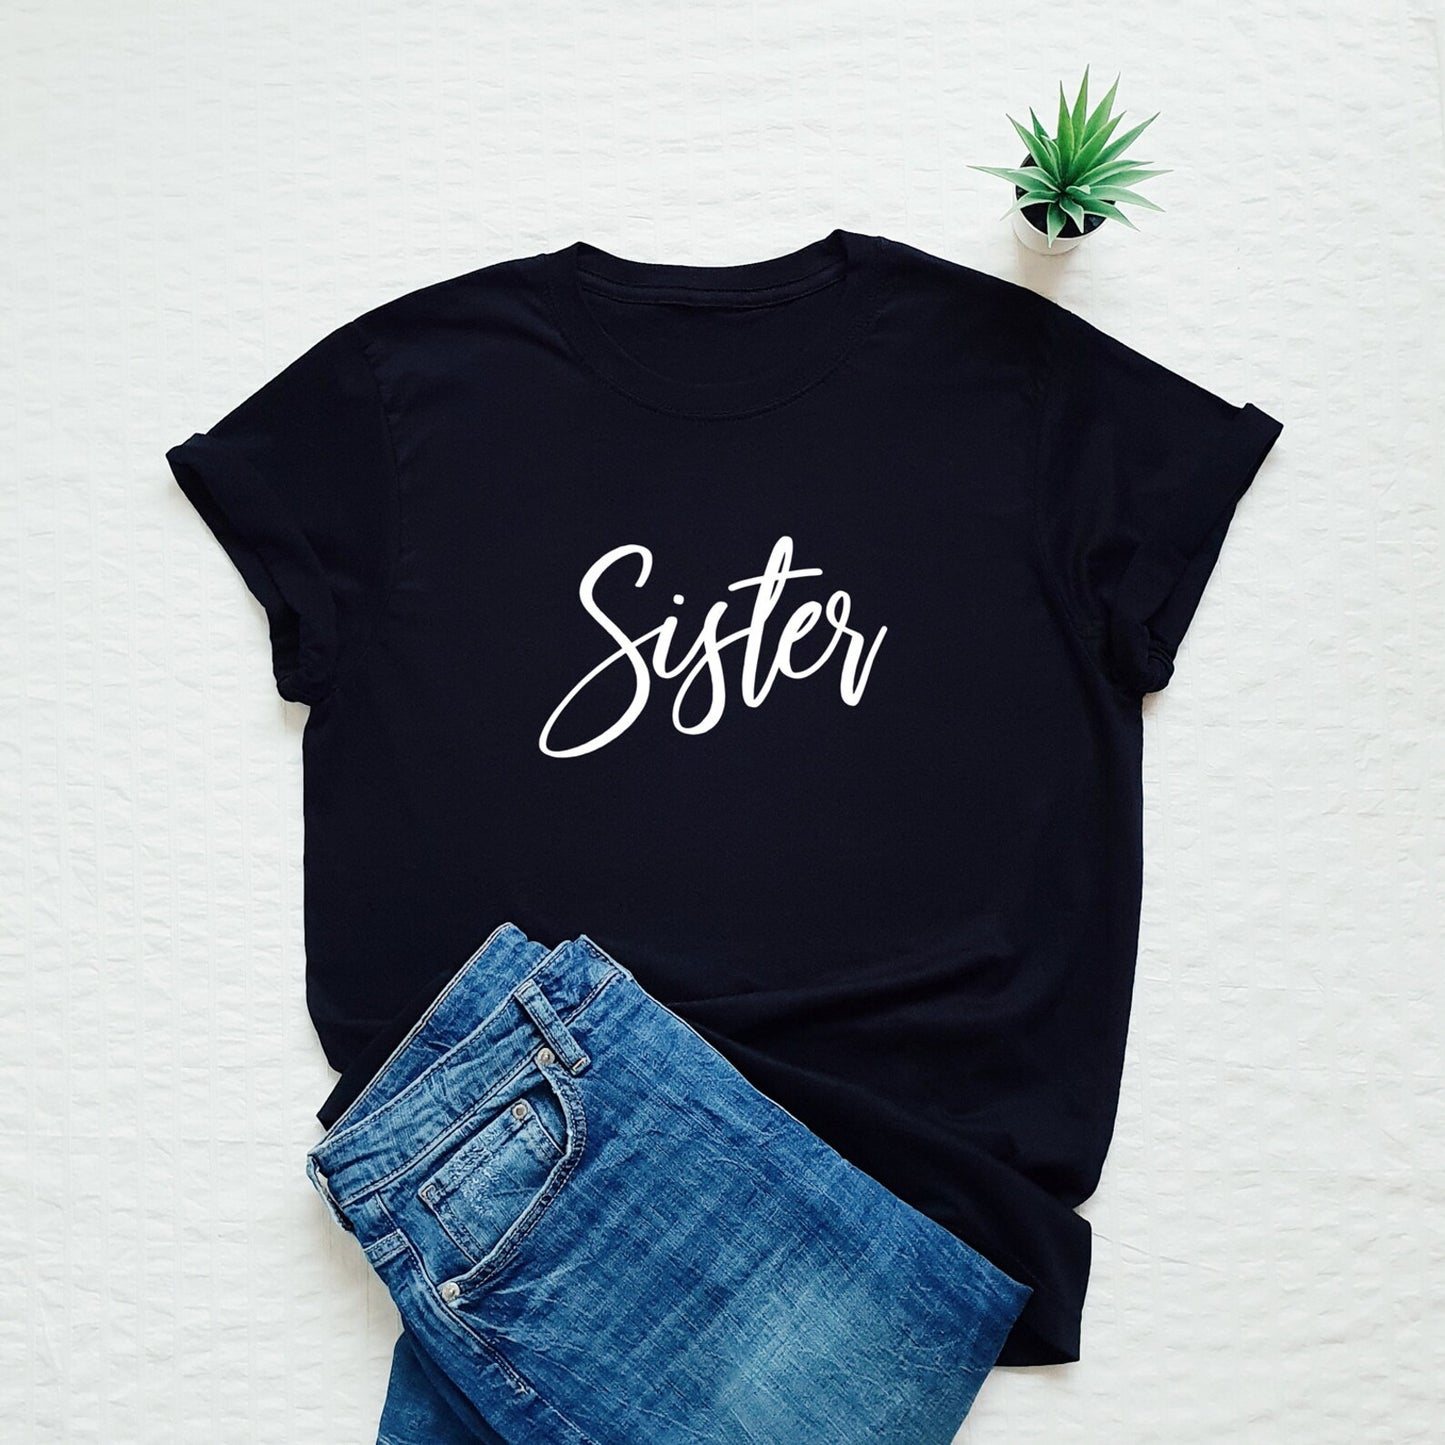 Sister Printed Black T-Shirt